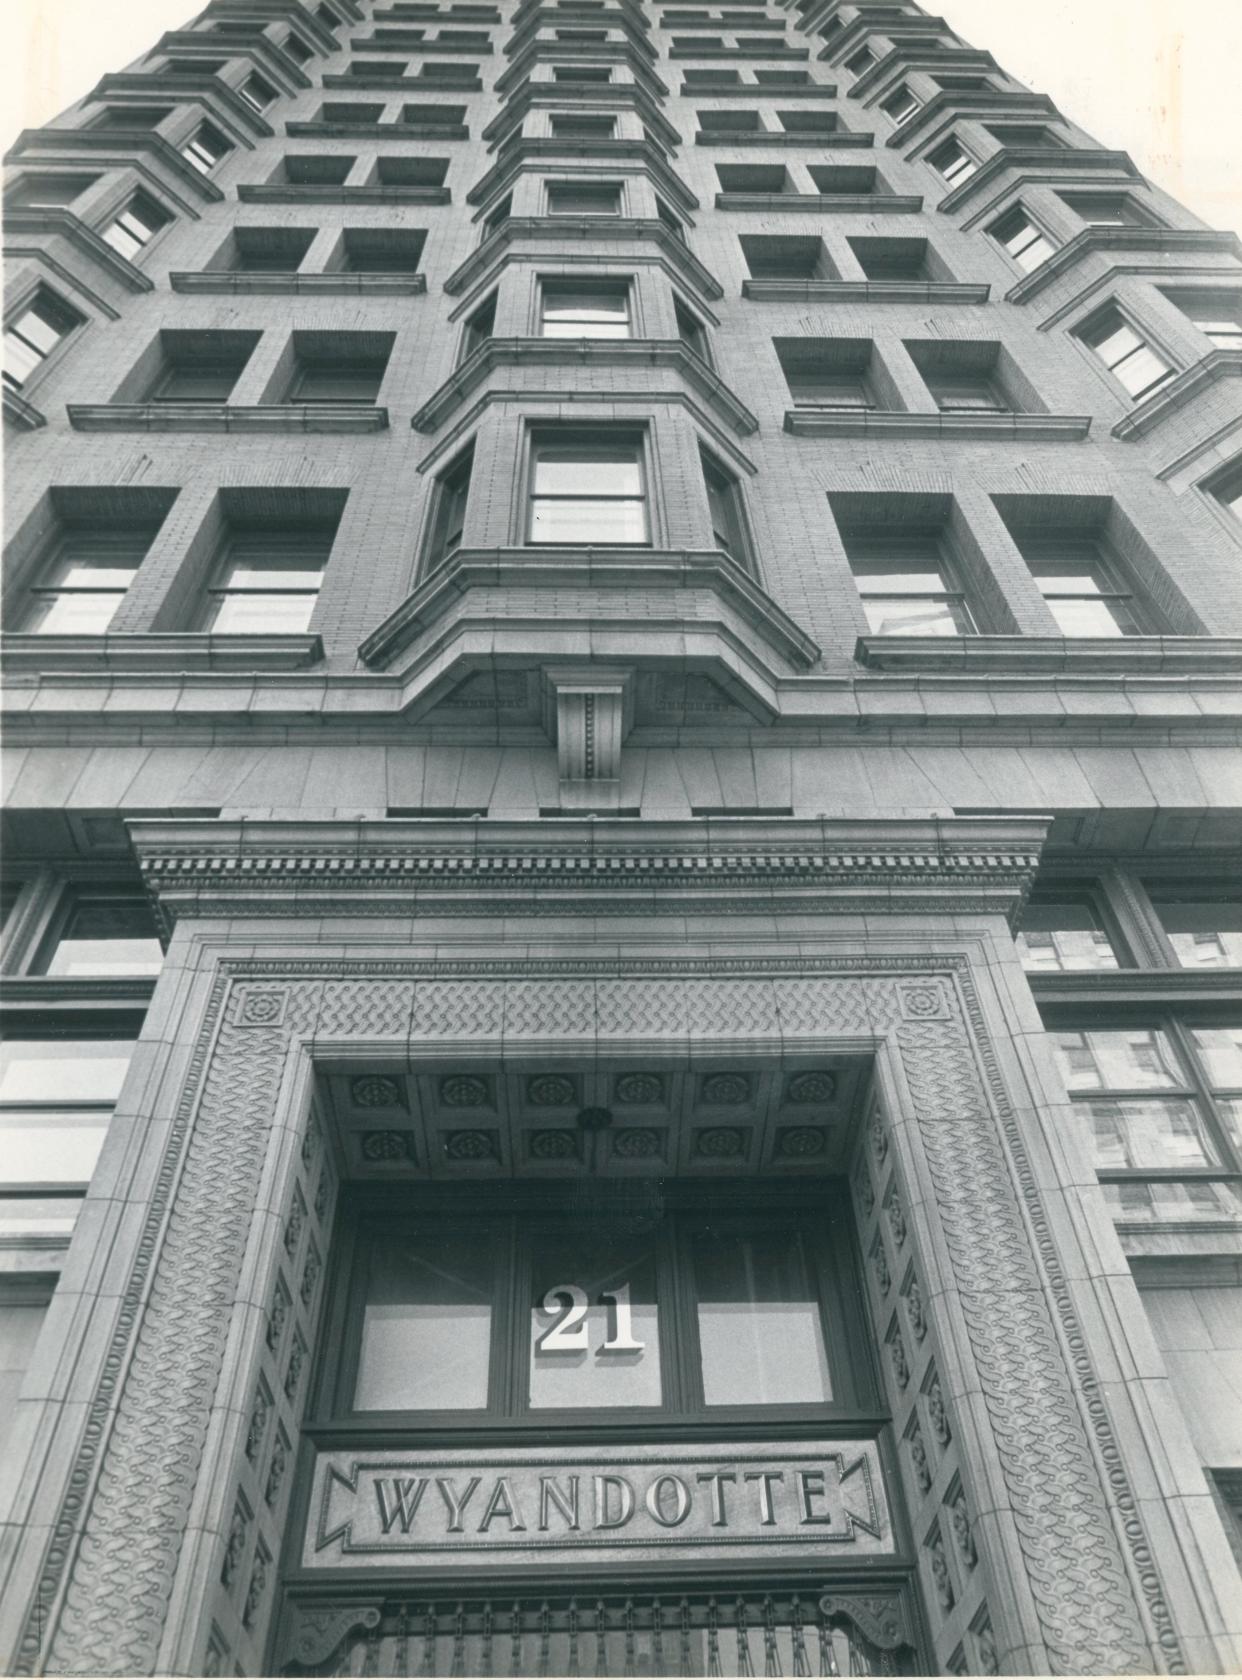 The Wyandotte Building, 21 W. Broad St.